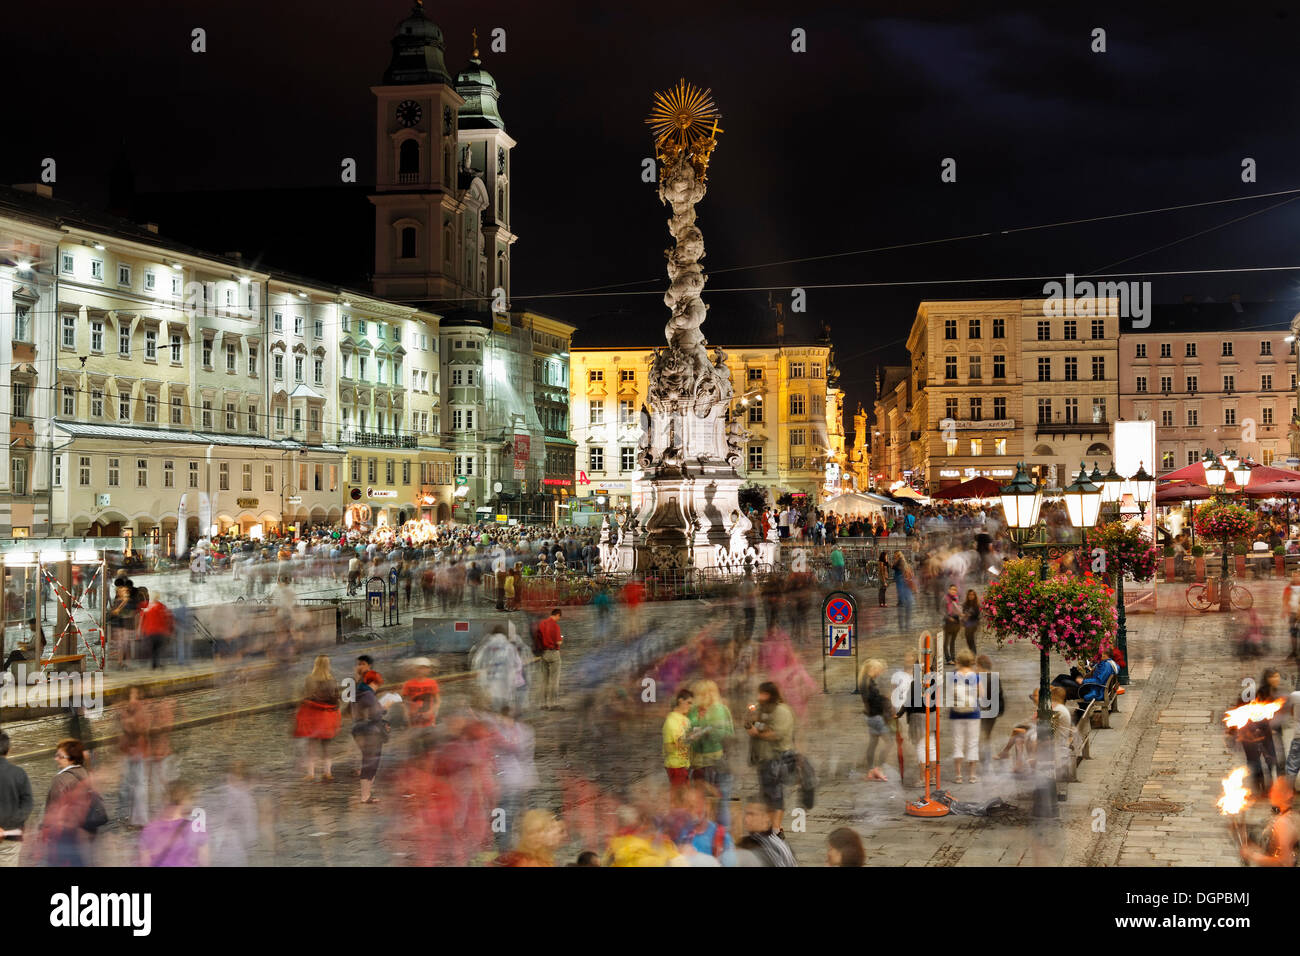 Pflasterspektakel street art festival, Hauptplatz square, Linz, Upper Austria, Austria, Europe, PublicGround Stock Photo